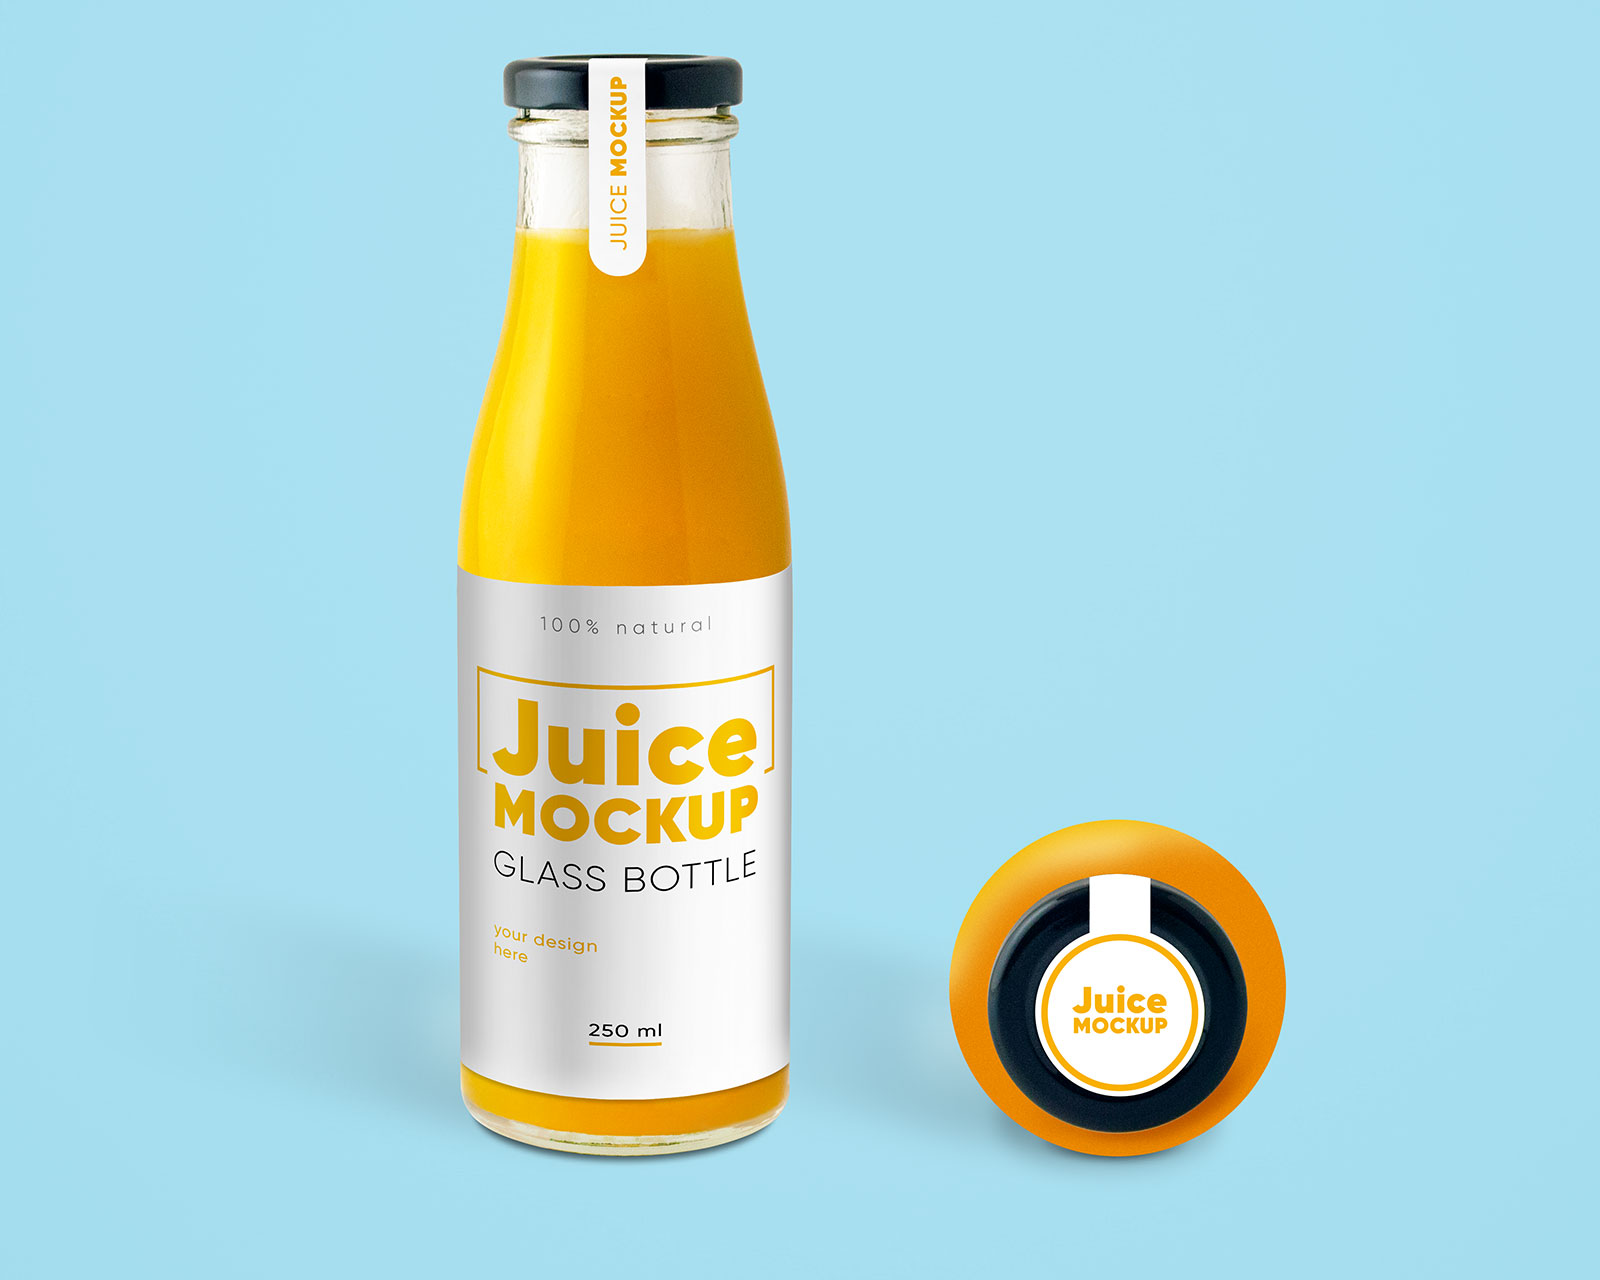 Free-Fruit-Juice-Glass-Bottle-Mockup-PSD-Set